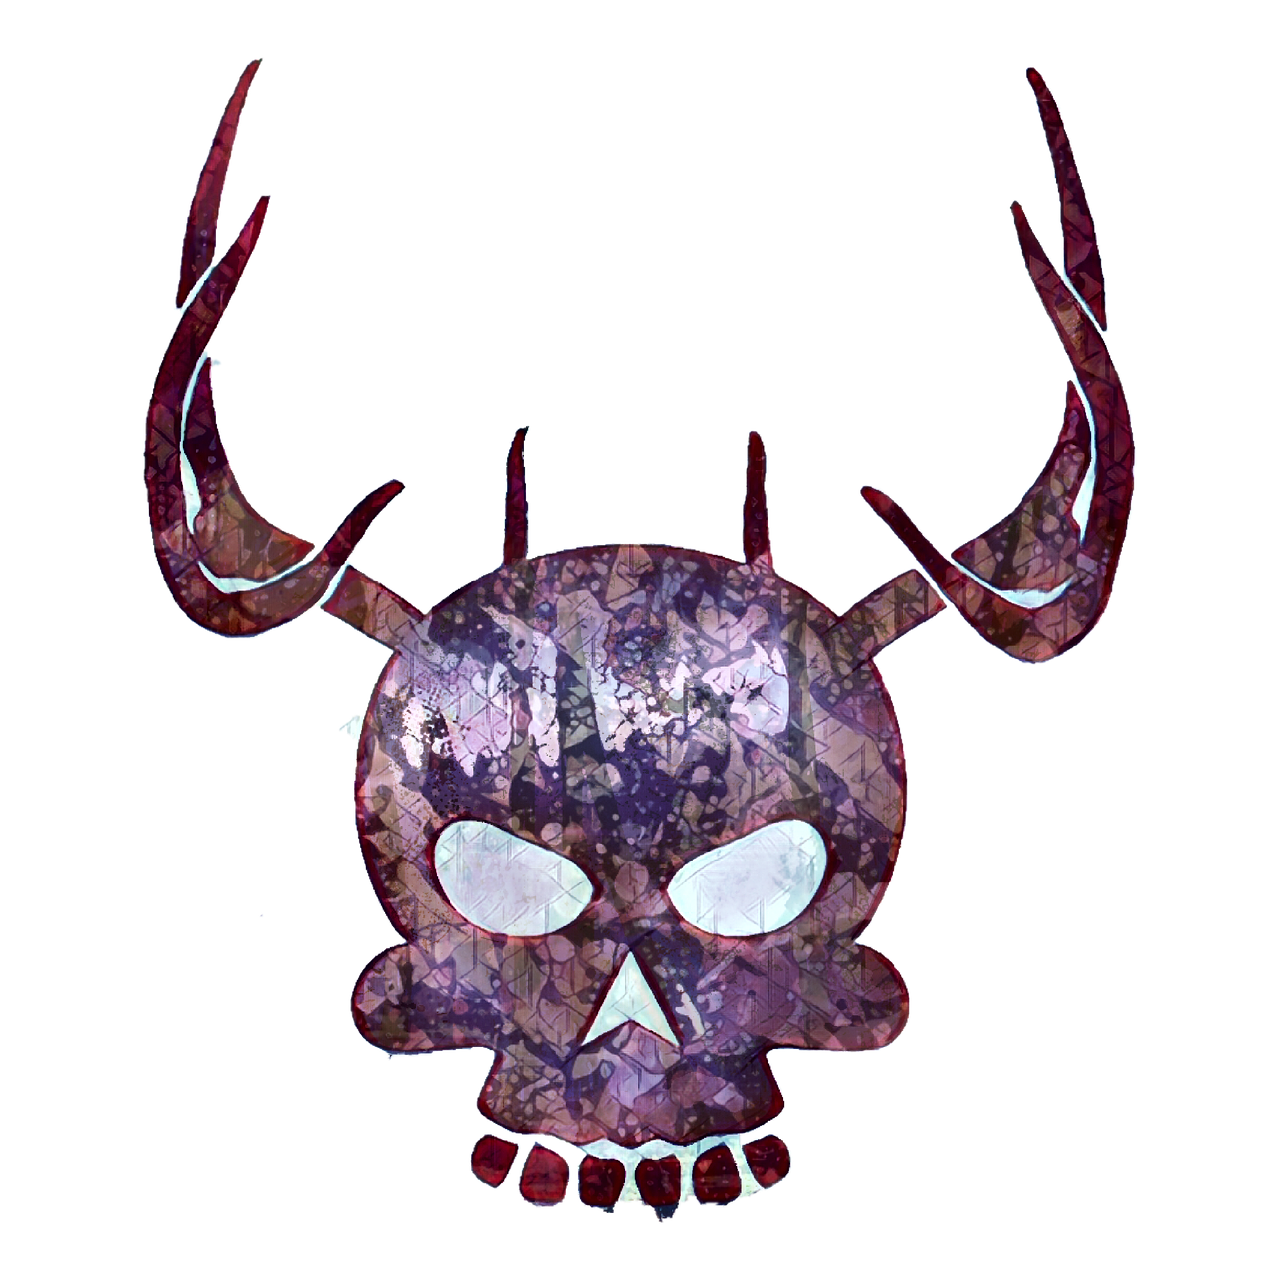 a skull with horns and a bow tie, concept art, by Daphne Allen, metal art, deep bleeding decaying colors!, logo art, horned helmet